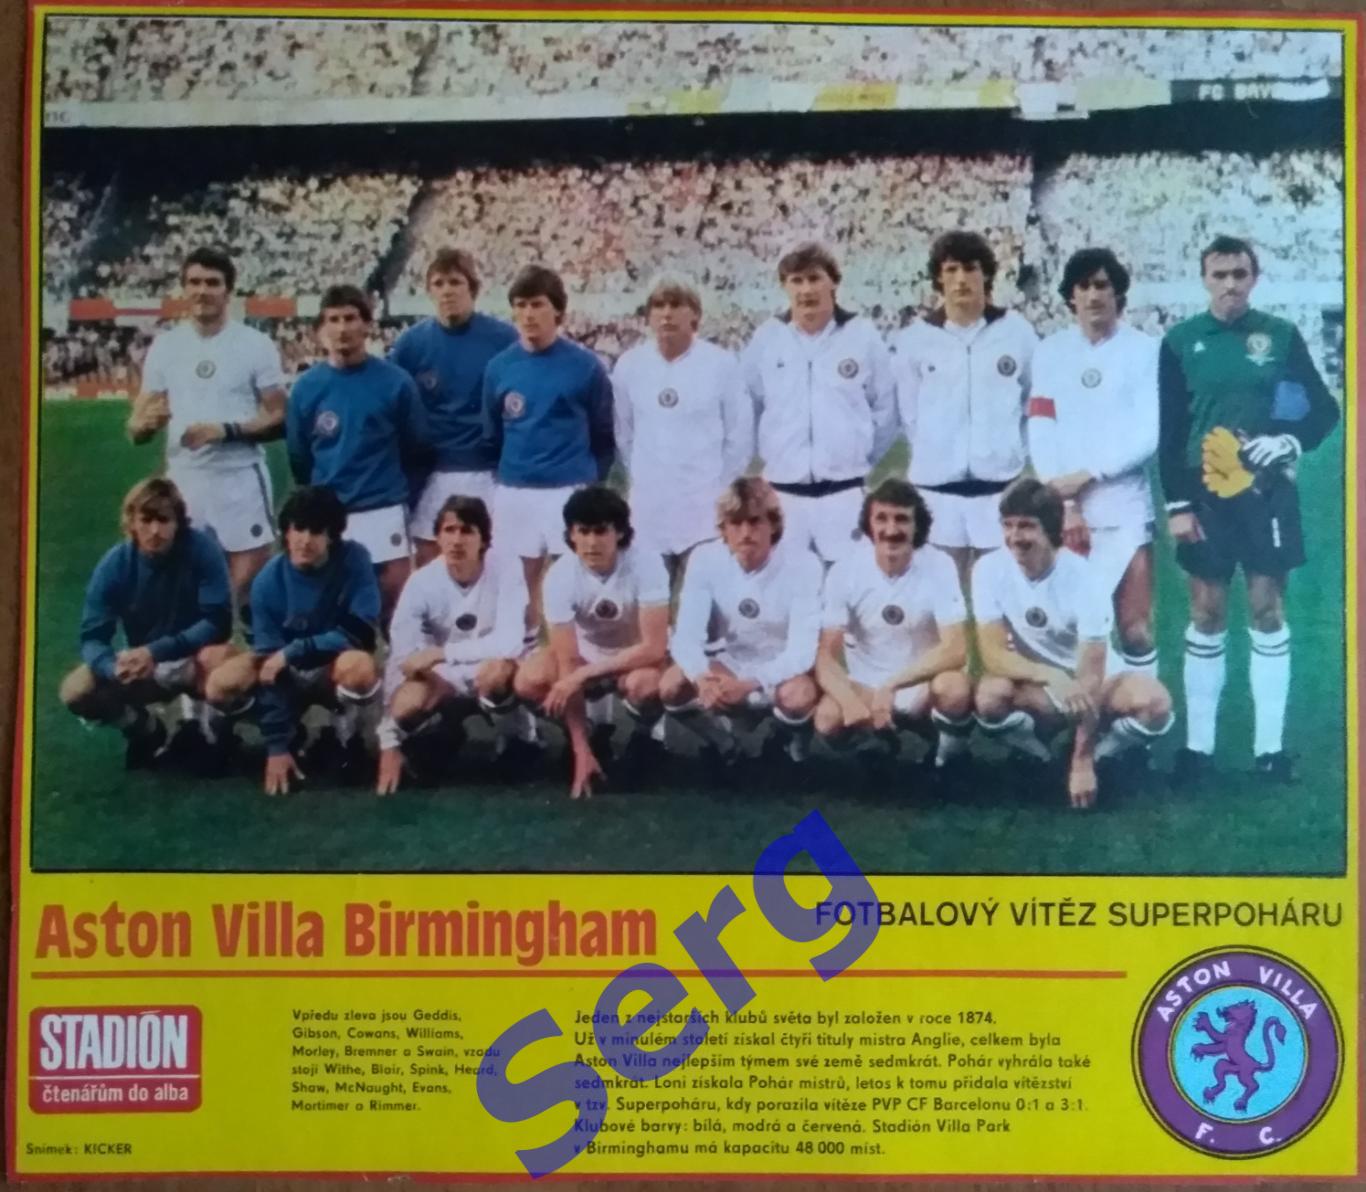 Постер Астон Вилла Бирмингем, Англия из журнала Стадион/Stadion